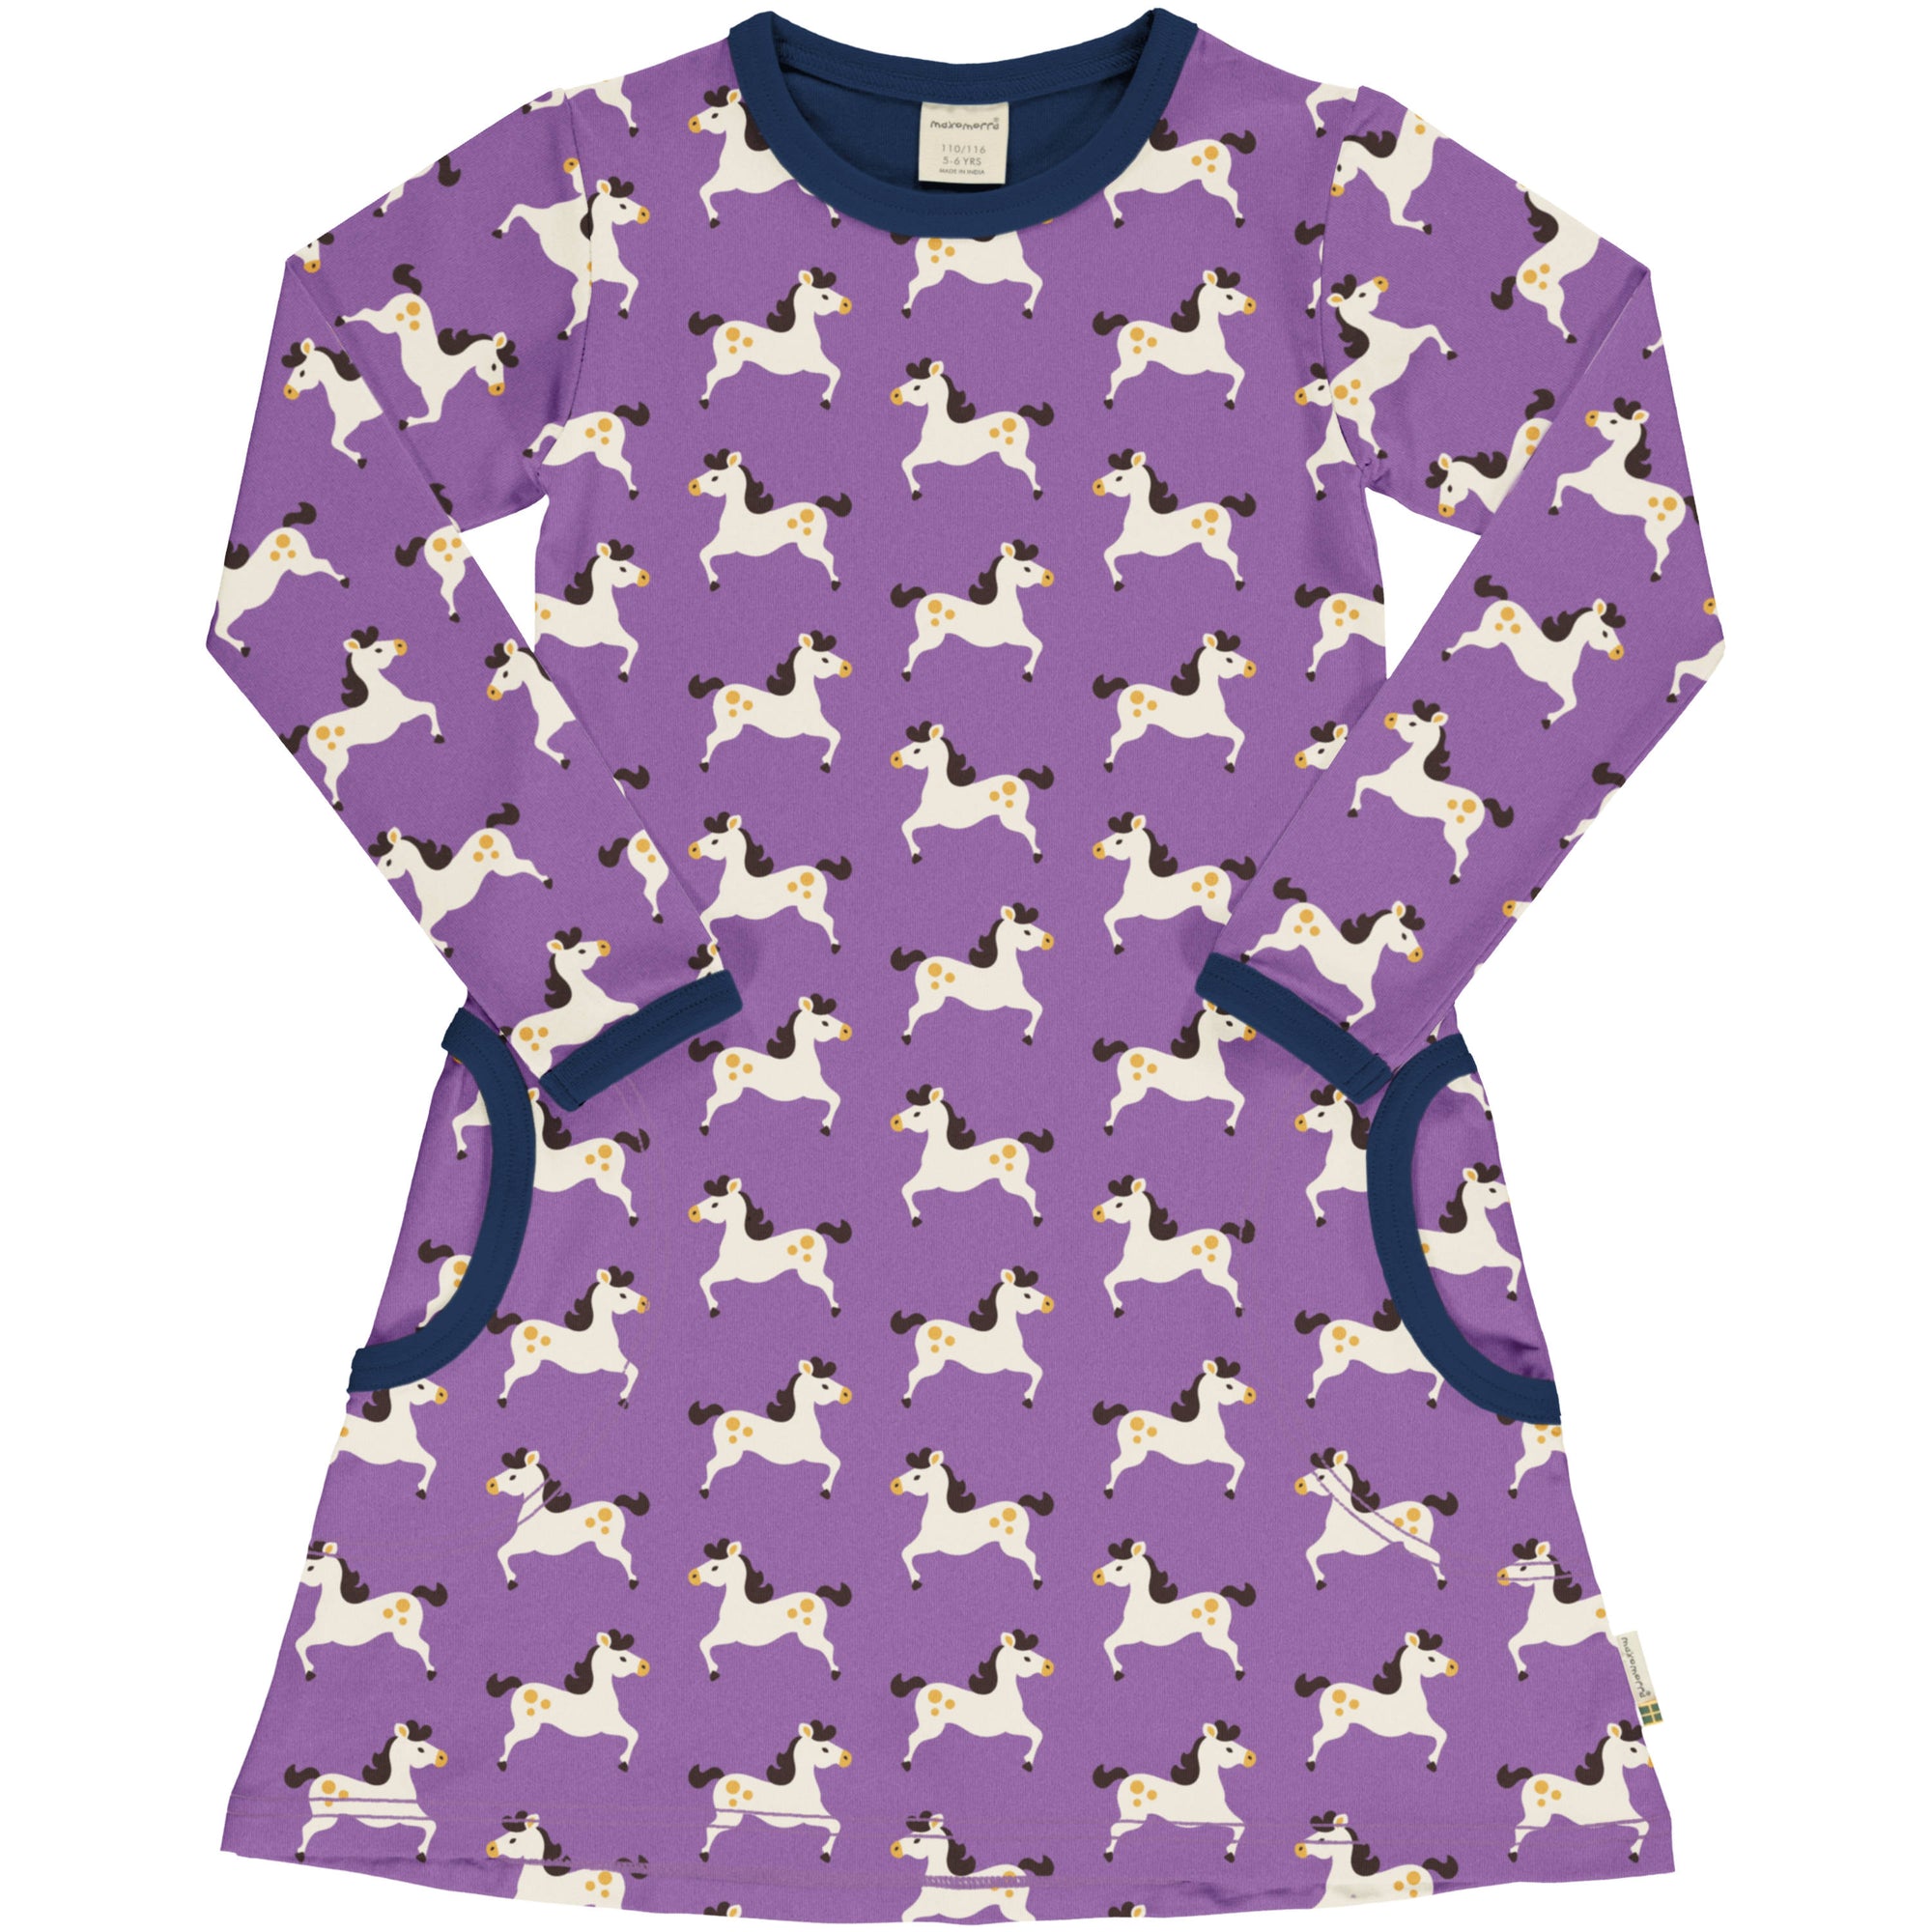 Maxomorra Horse Pocket Dress Aw23purple Clothing 3-4YRS / Purple,5-6YRS / Purple,7-8YRS / Purple,9-10YRS / Purple